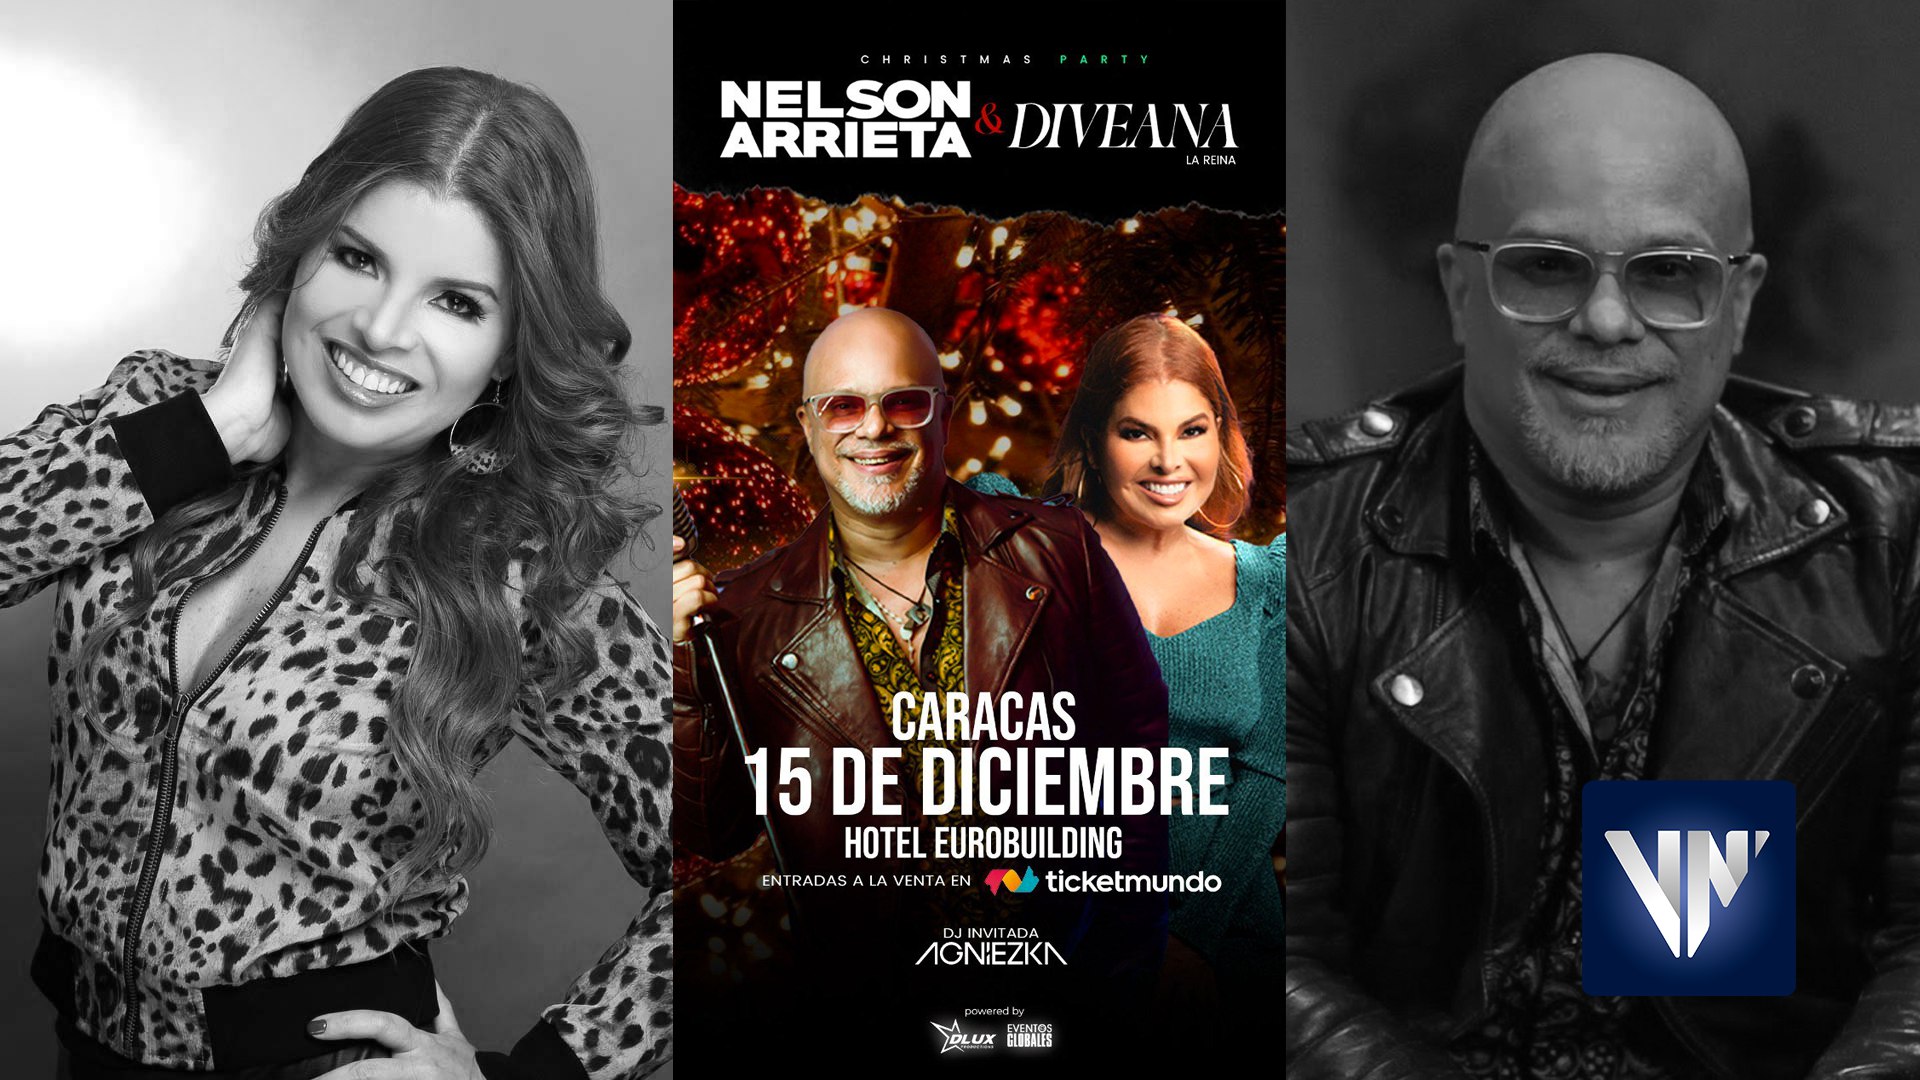 Nelson Arrieta y Diveana se unen para una fiesta navideña: “Christmas Party”